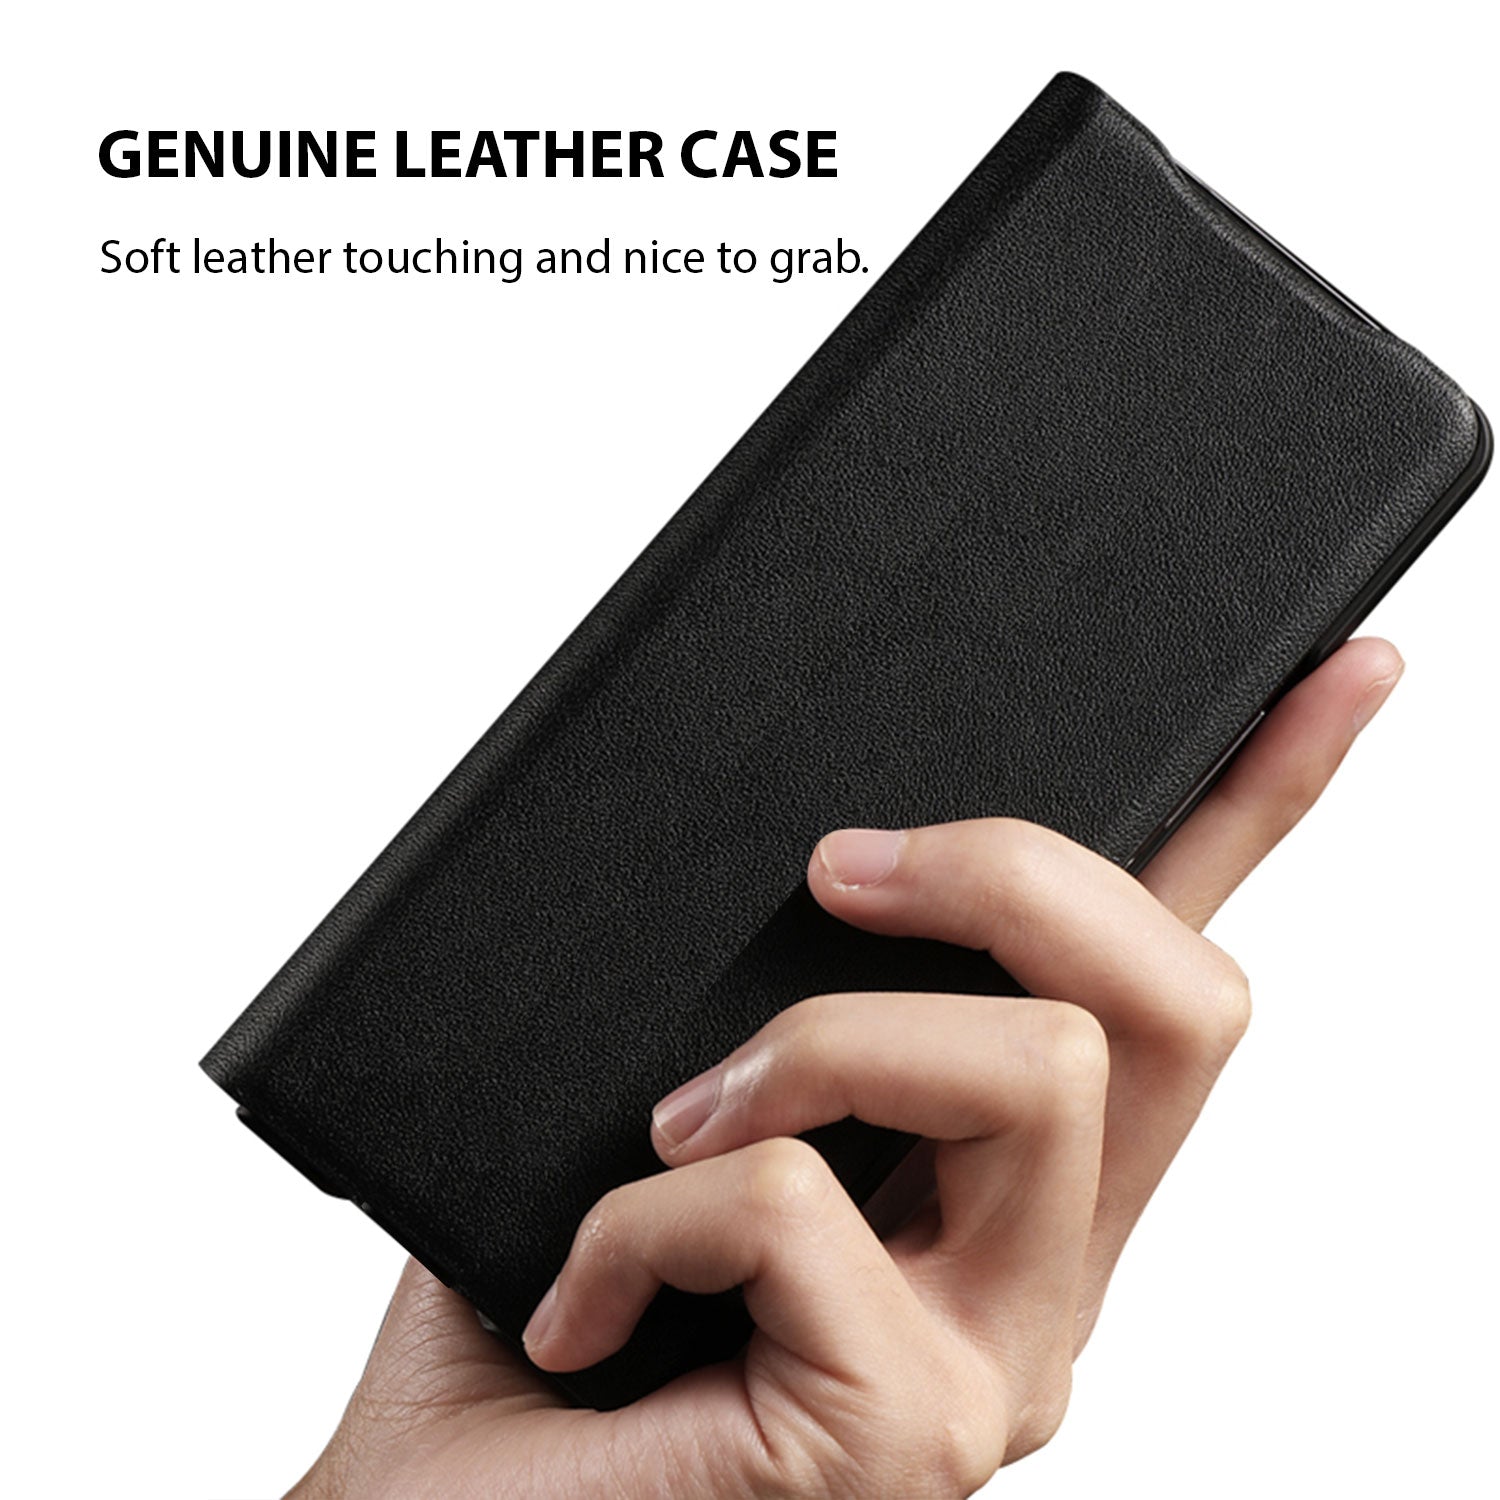 Tough On Samsung Galaxy Z Fold4 5G Case Fine Leather Black